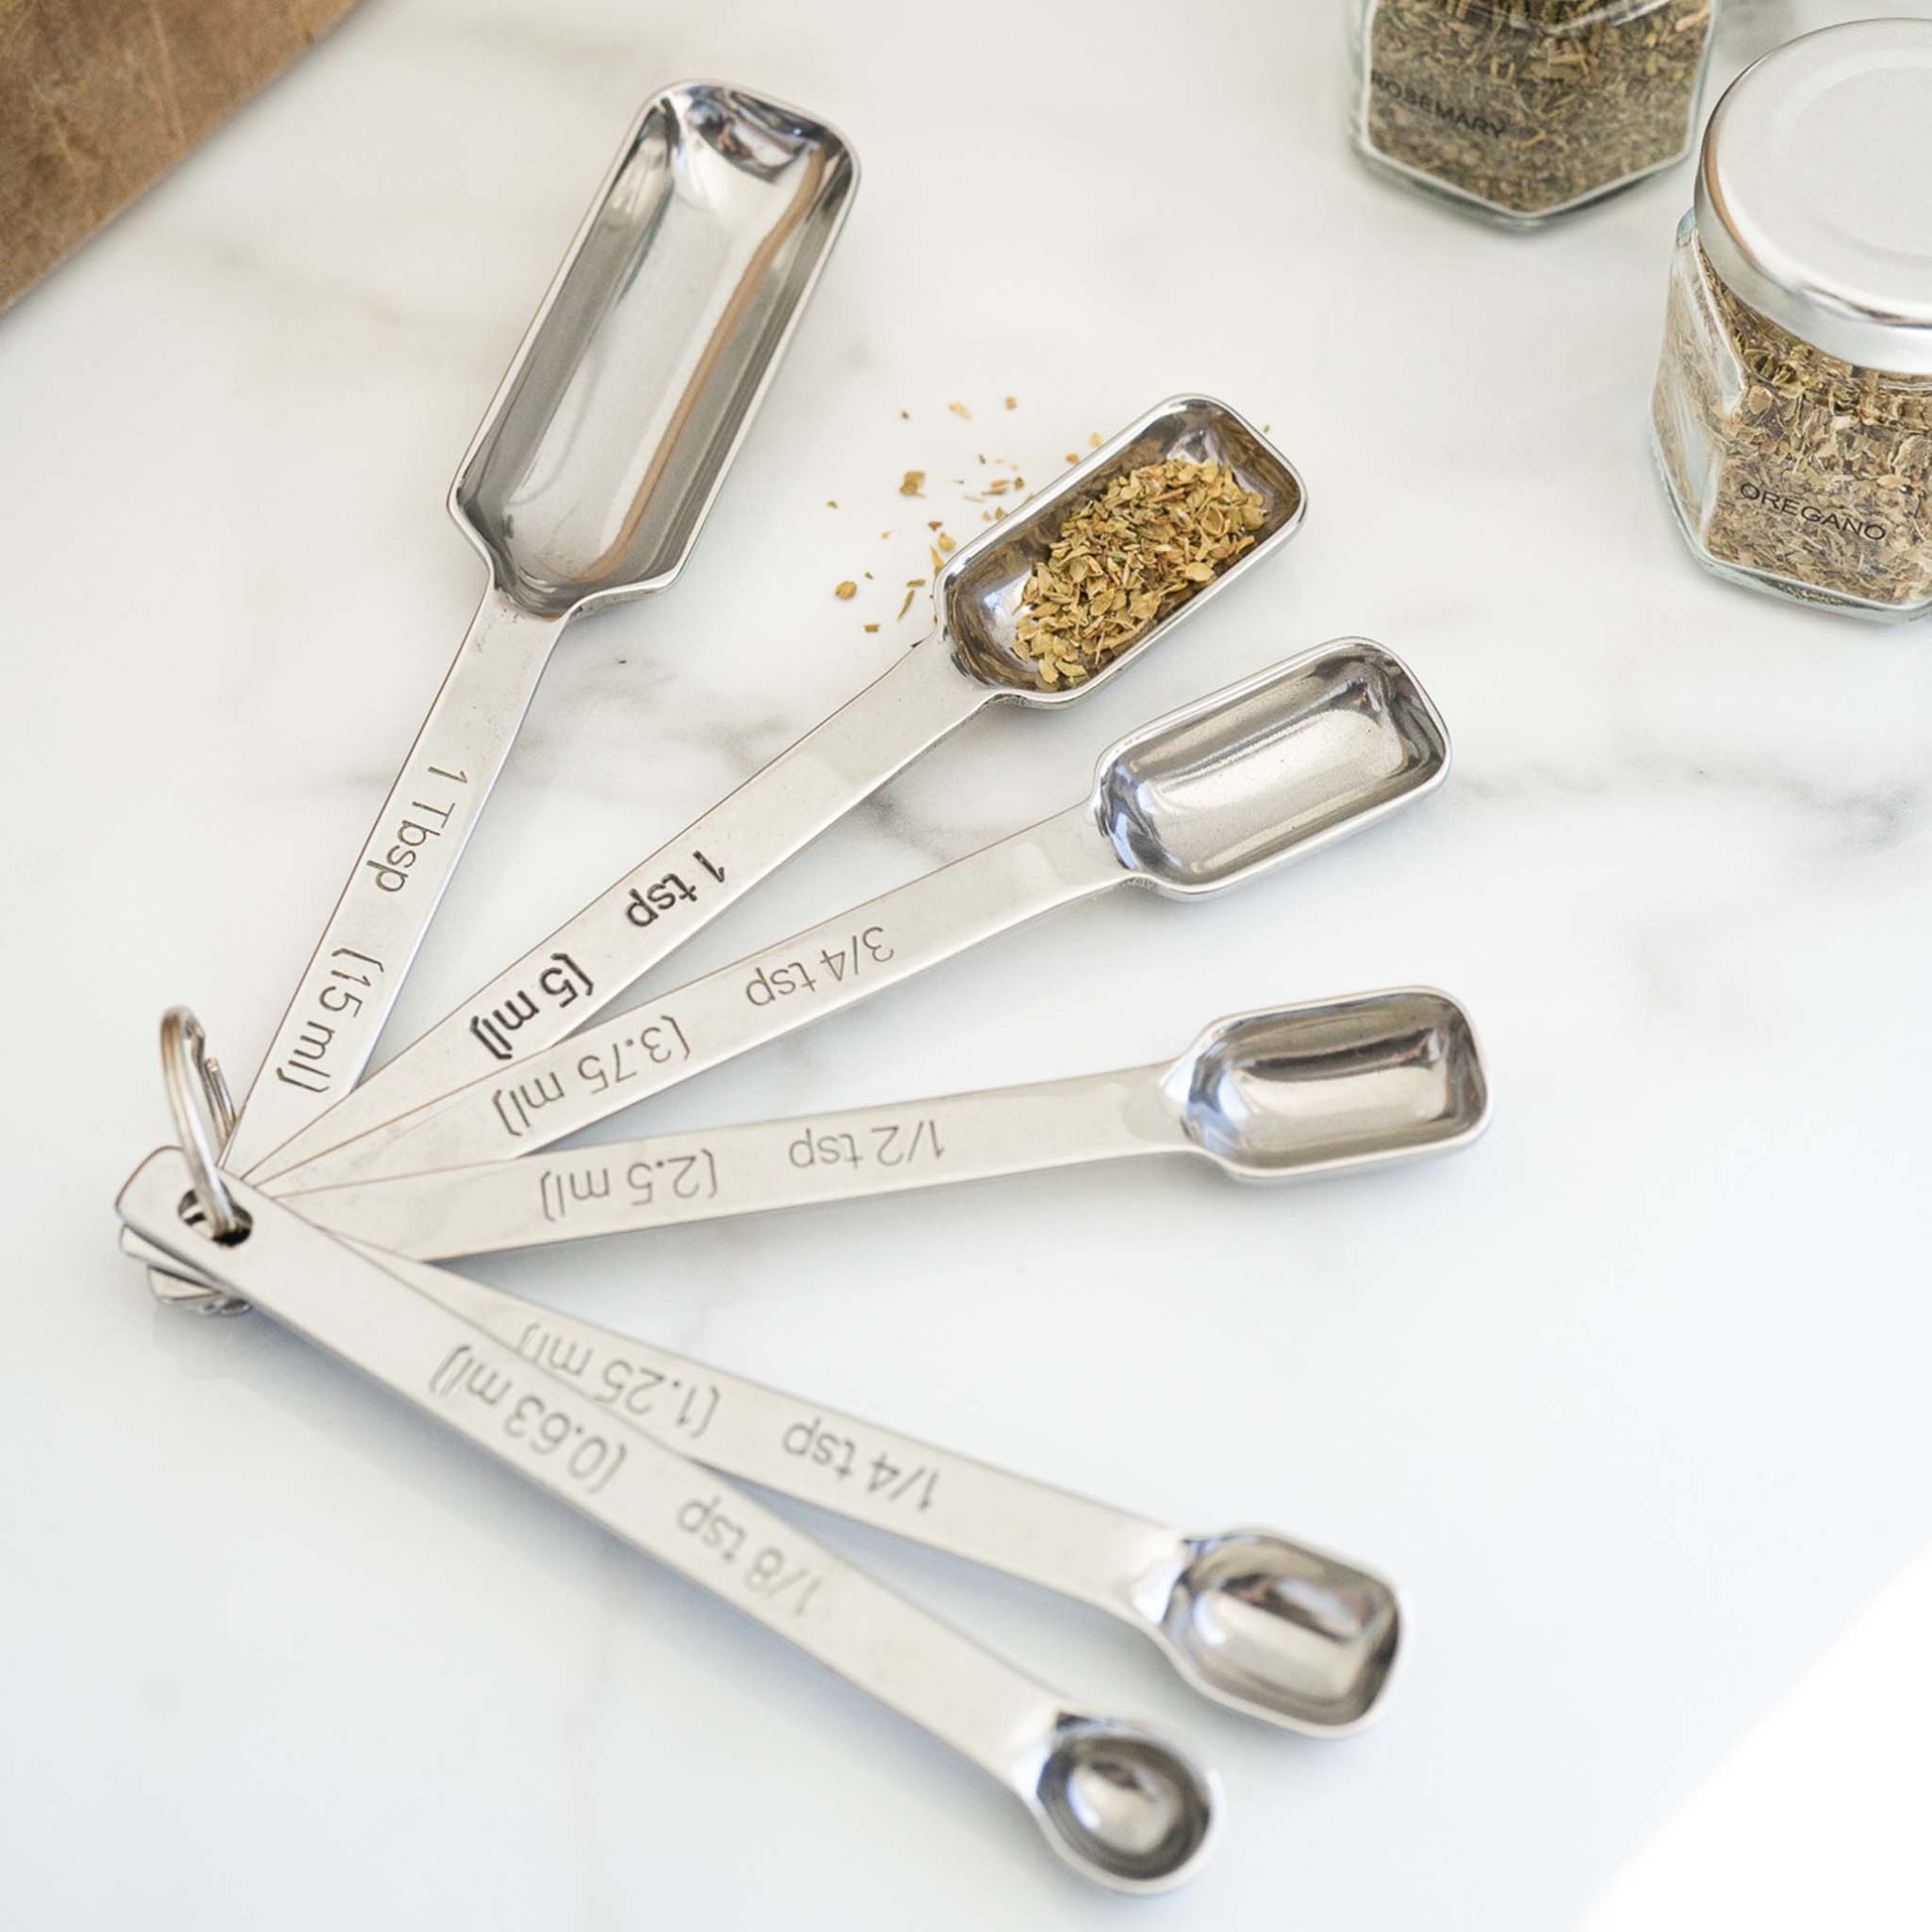 MAIRICO Premium Stainless Steel Rectangular Measuring Spoons